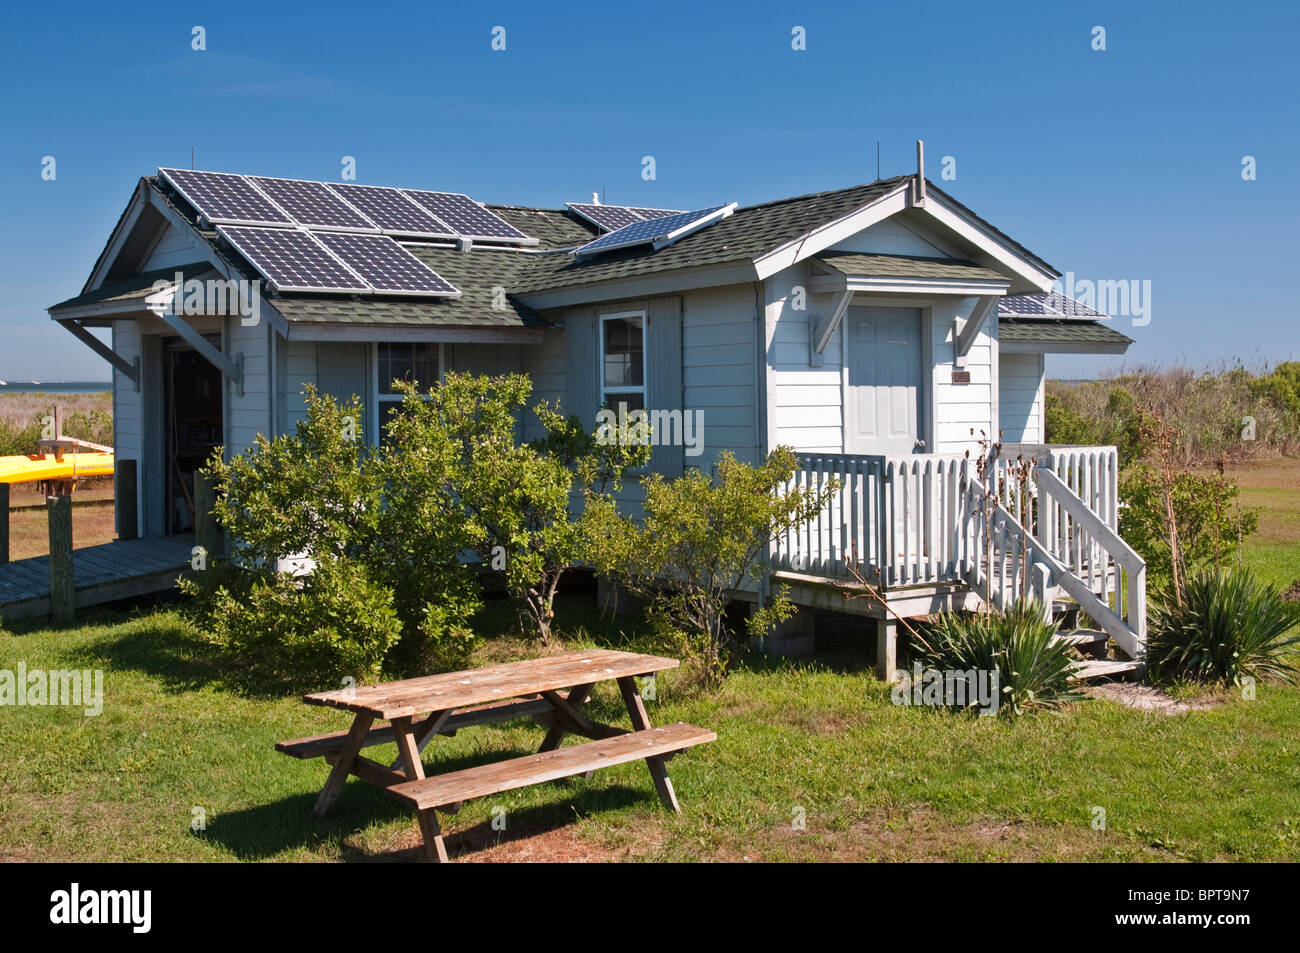 Beach house with photovoltaic solar panels Stock Photo